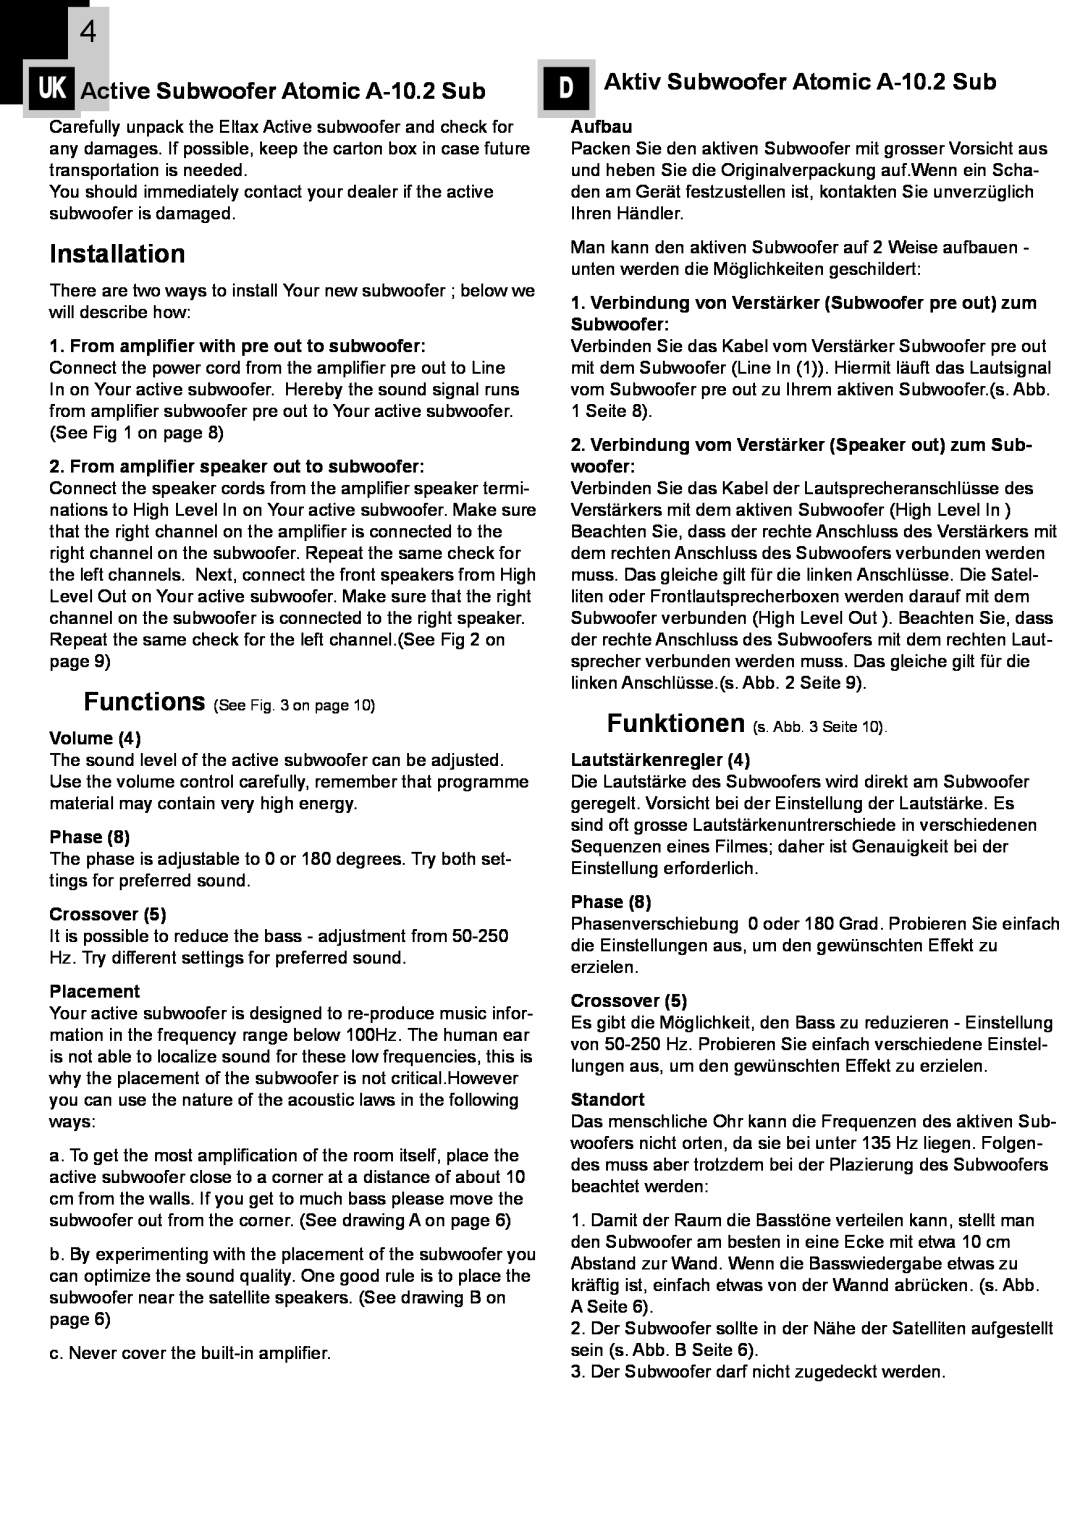 Eltax instruction manual Installation, UK Active Subwoofer Atomic A-10.2 Sub, D Aktiv Subwoofer Atomic A-10.2 Sub 